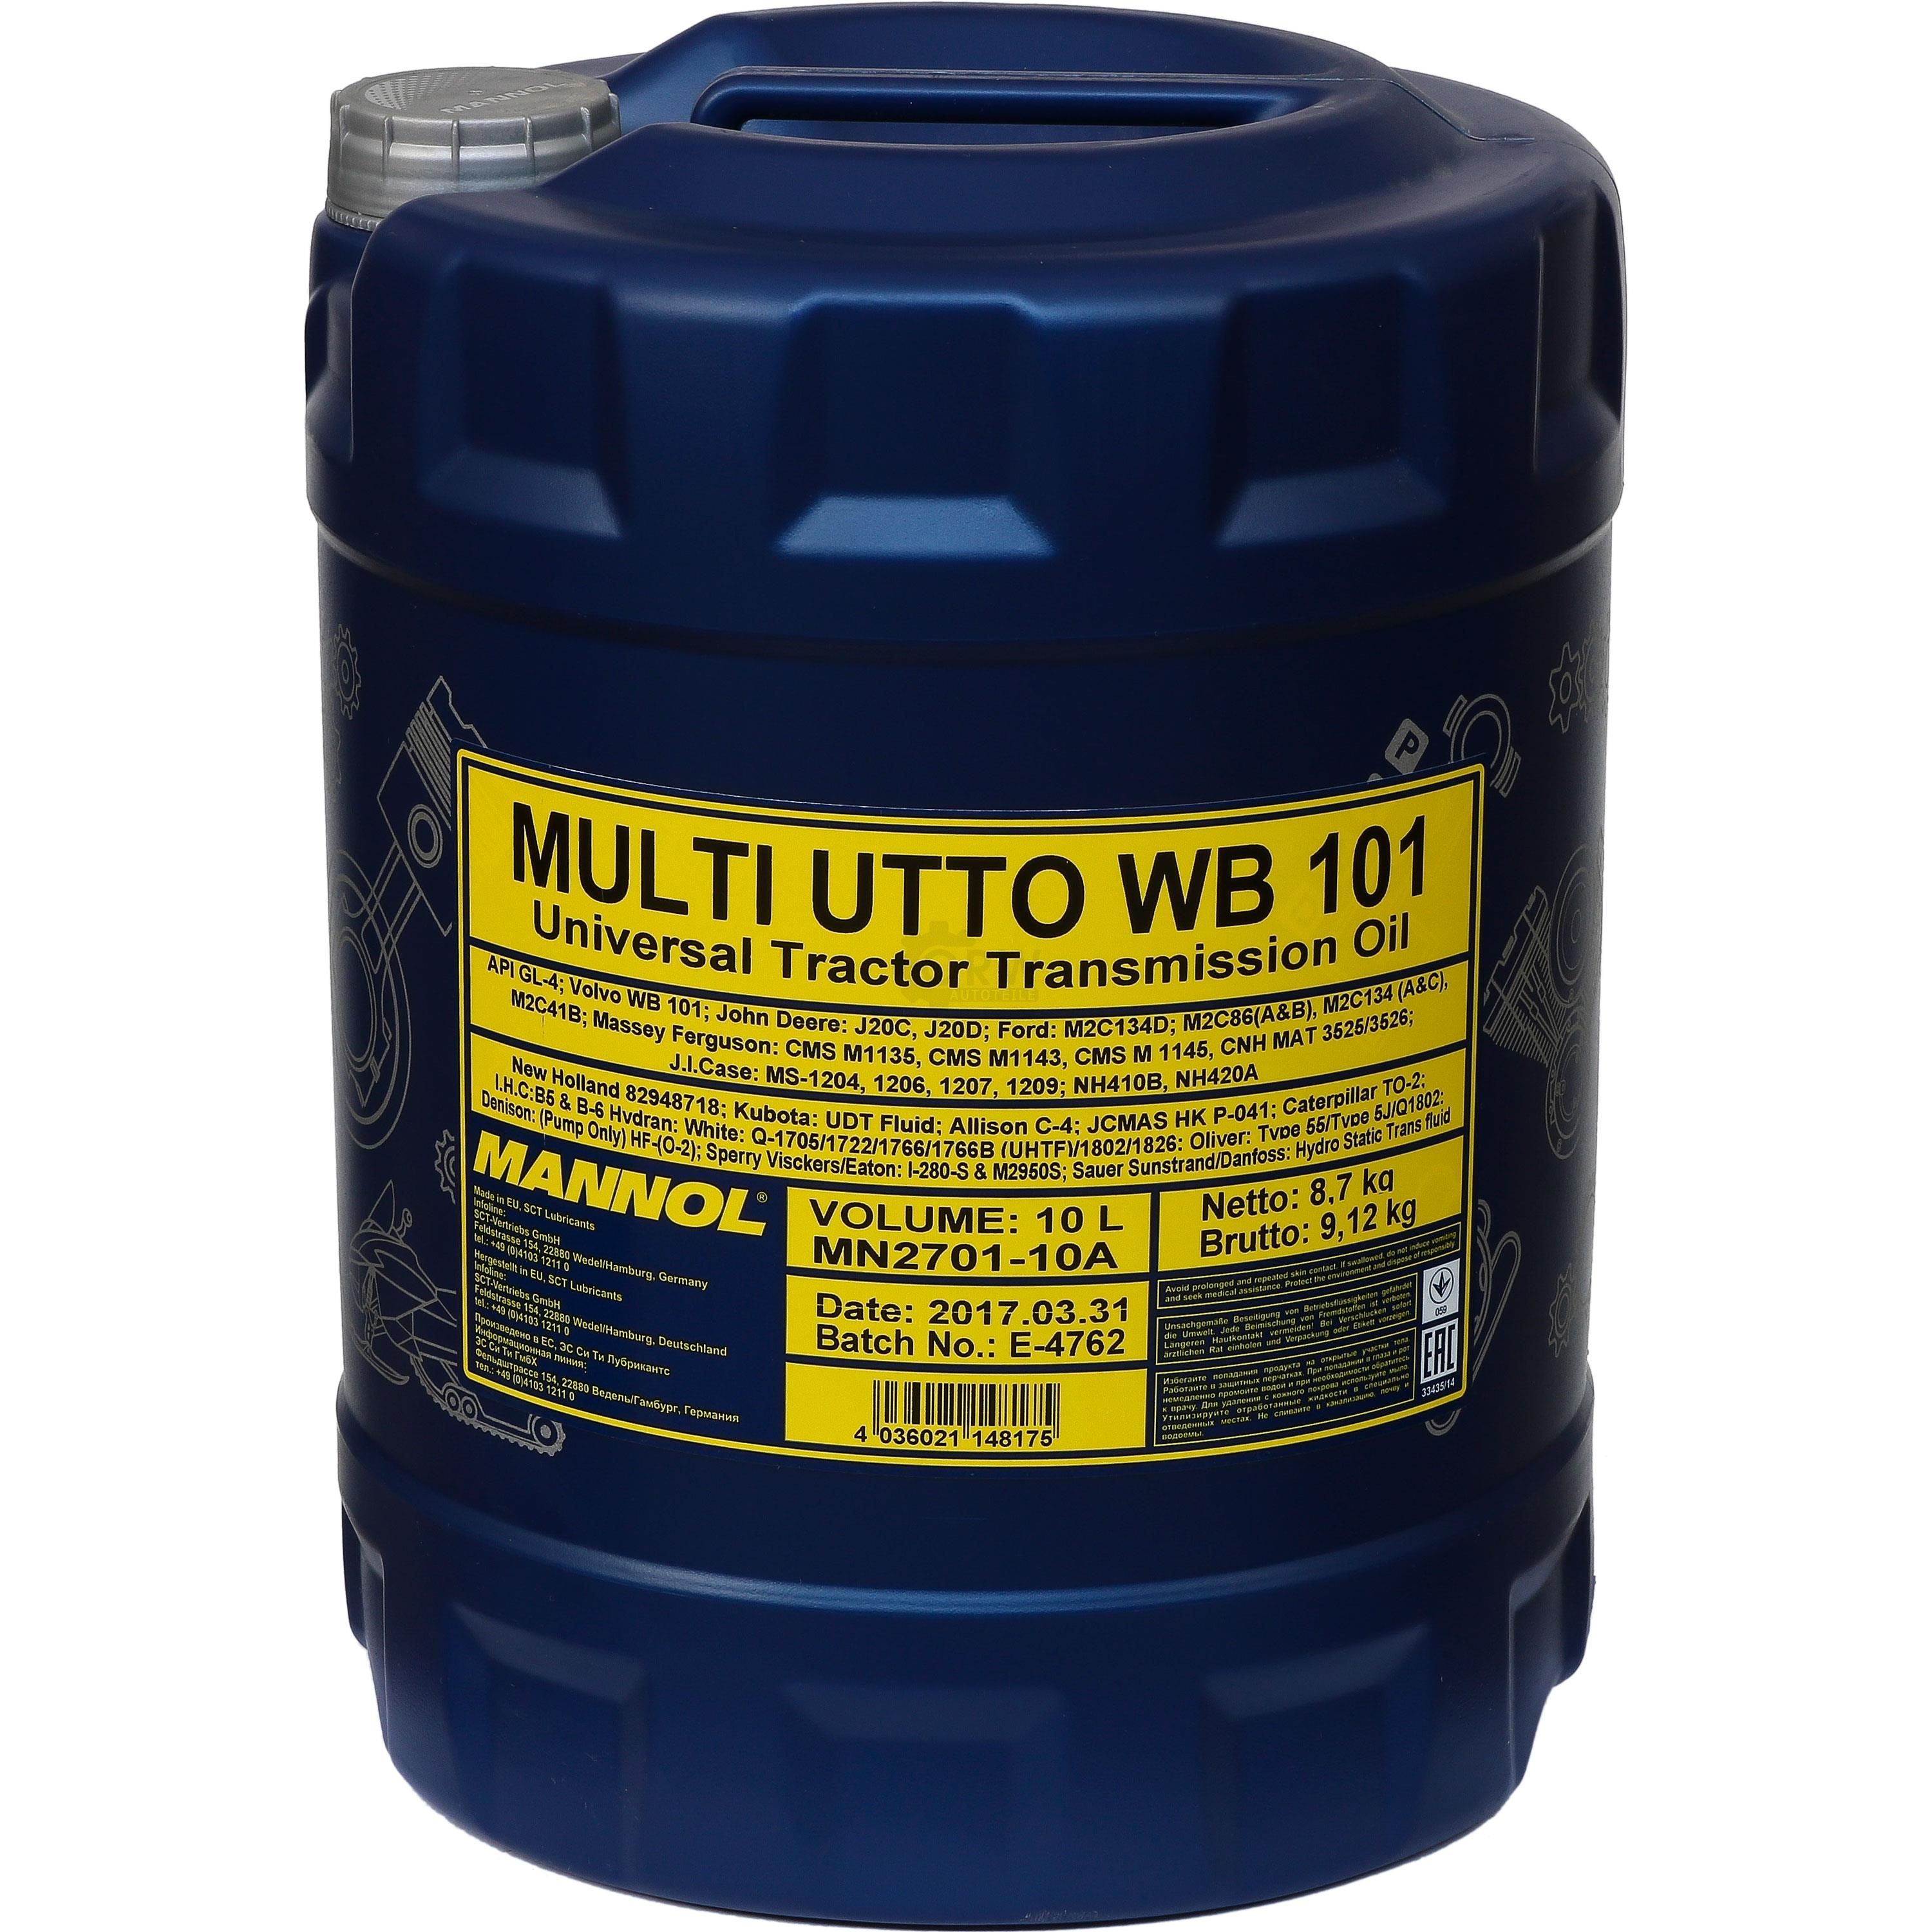 10 Liter MANNOL Multi UTTO WB 101 API GL-4 Getriebeöl Hydrauliköl Schlepper Oil